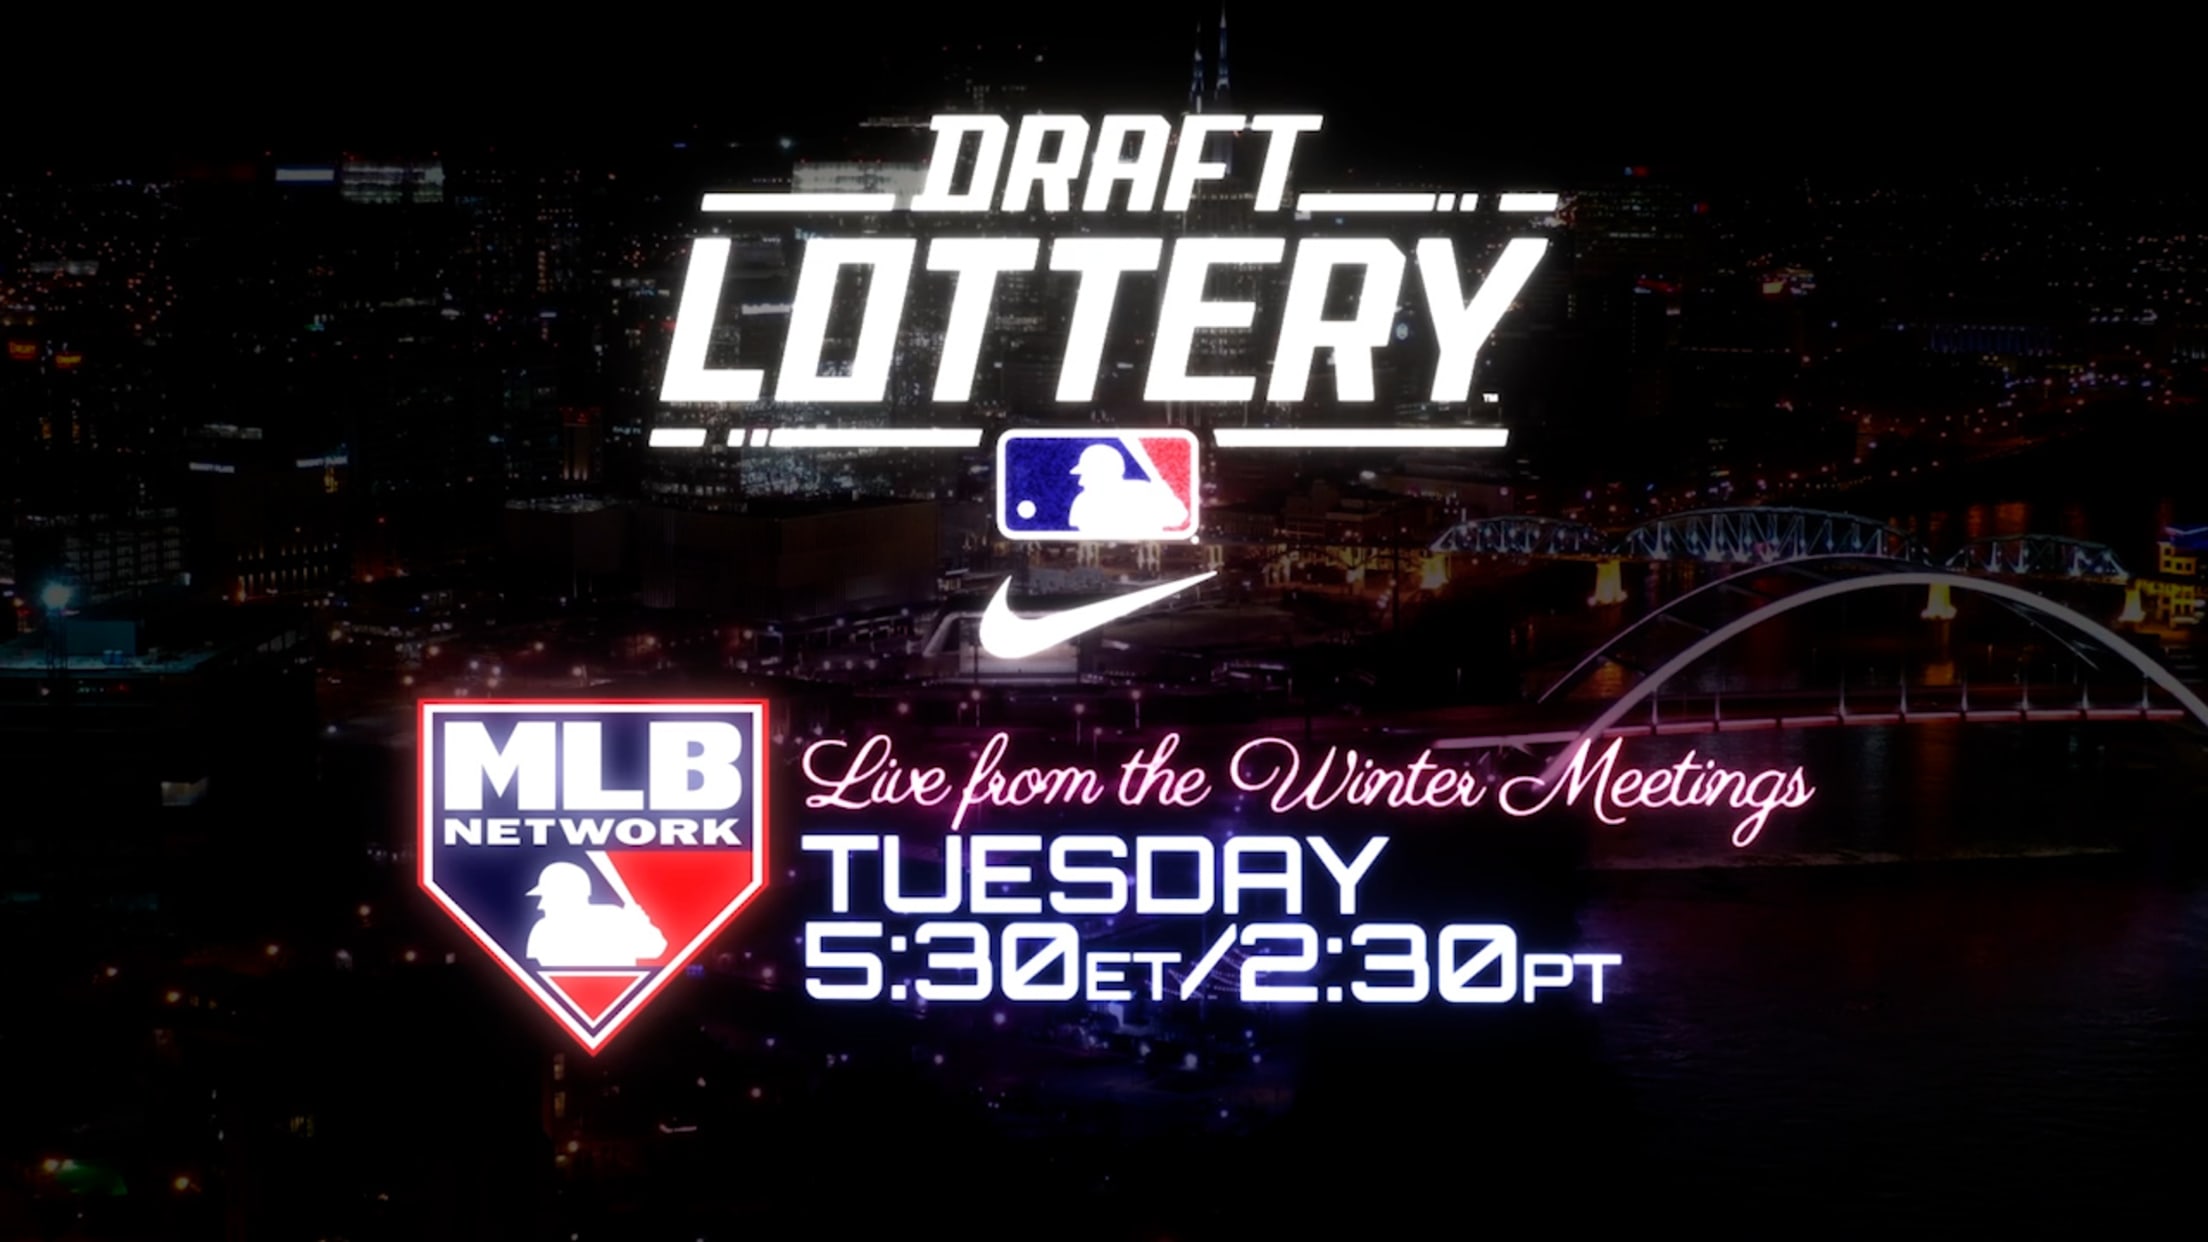 Draft Lottery tonight on MLB Network